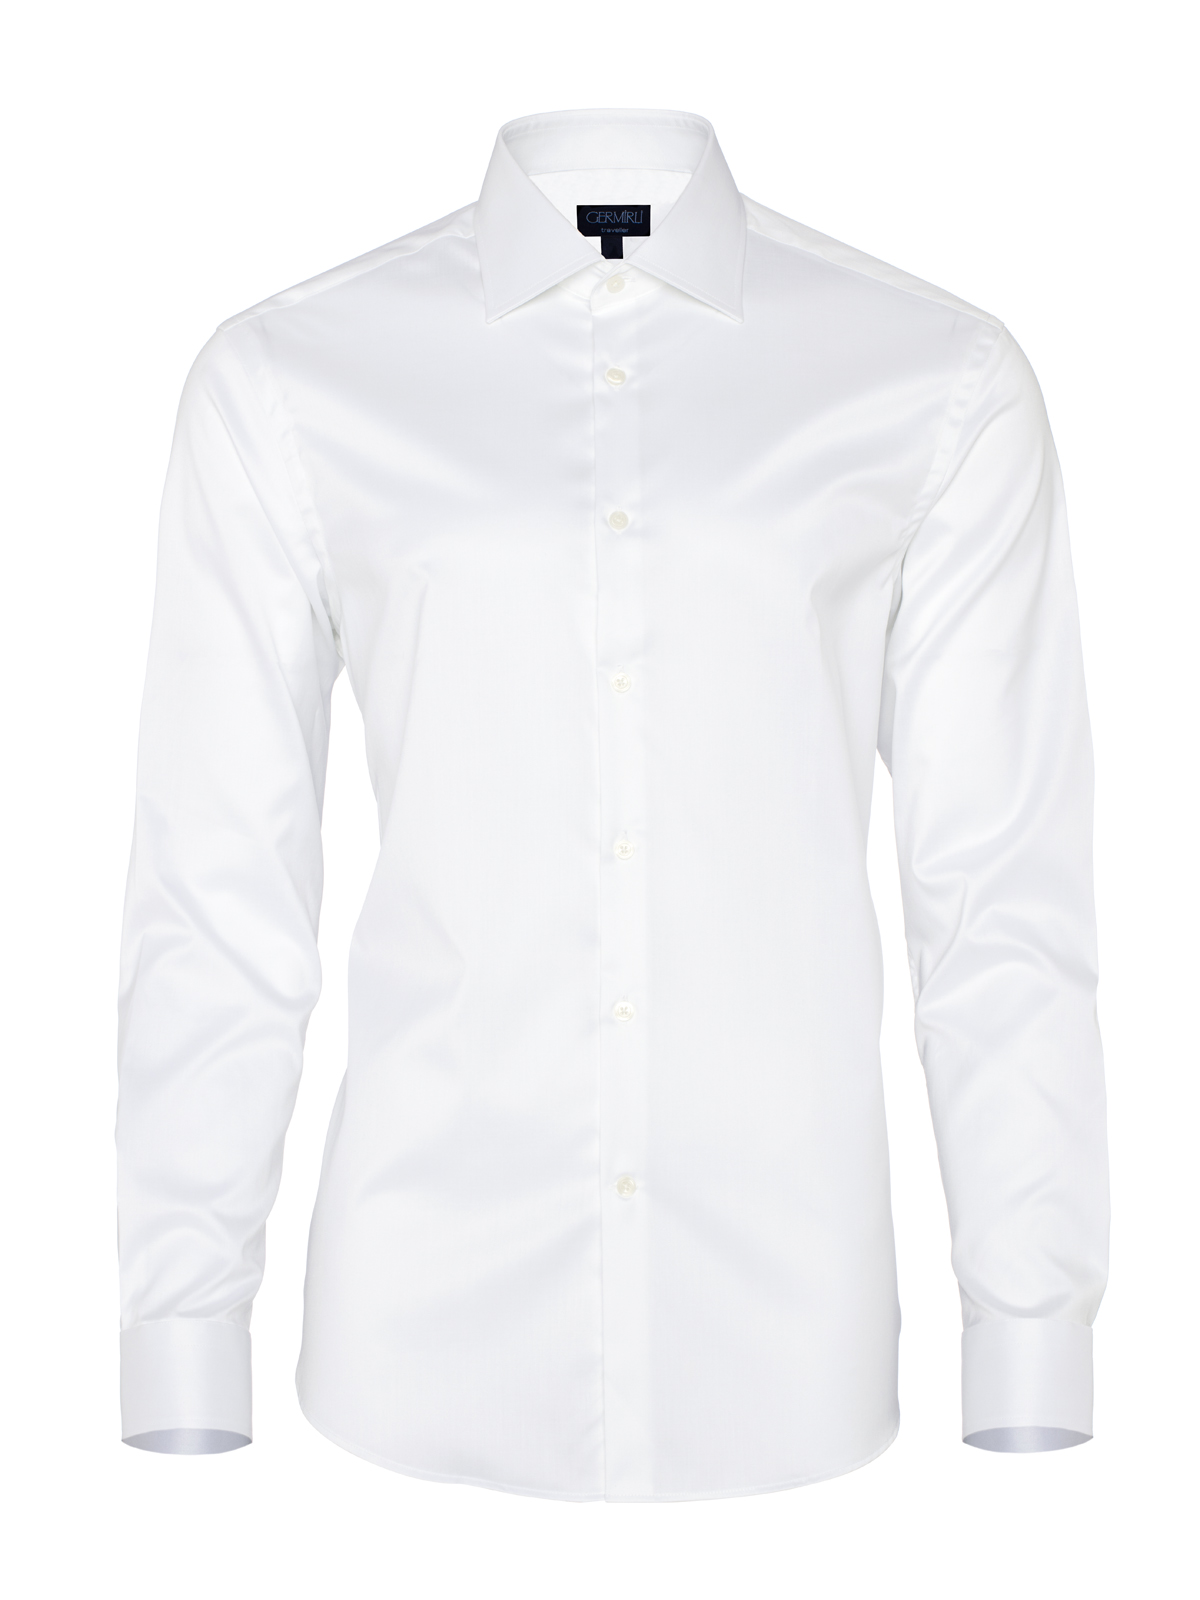 Germirli - Germirli Non Iron White Twill Semi Spread Tailor Fit Shirt